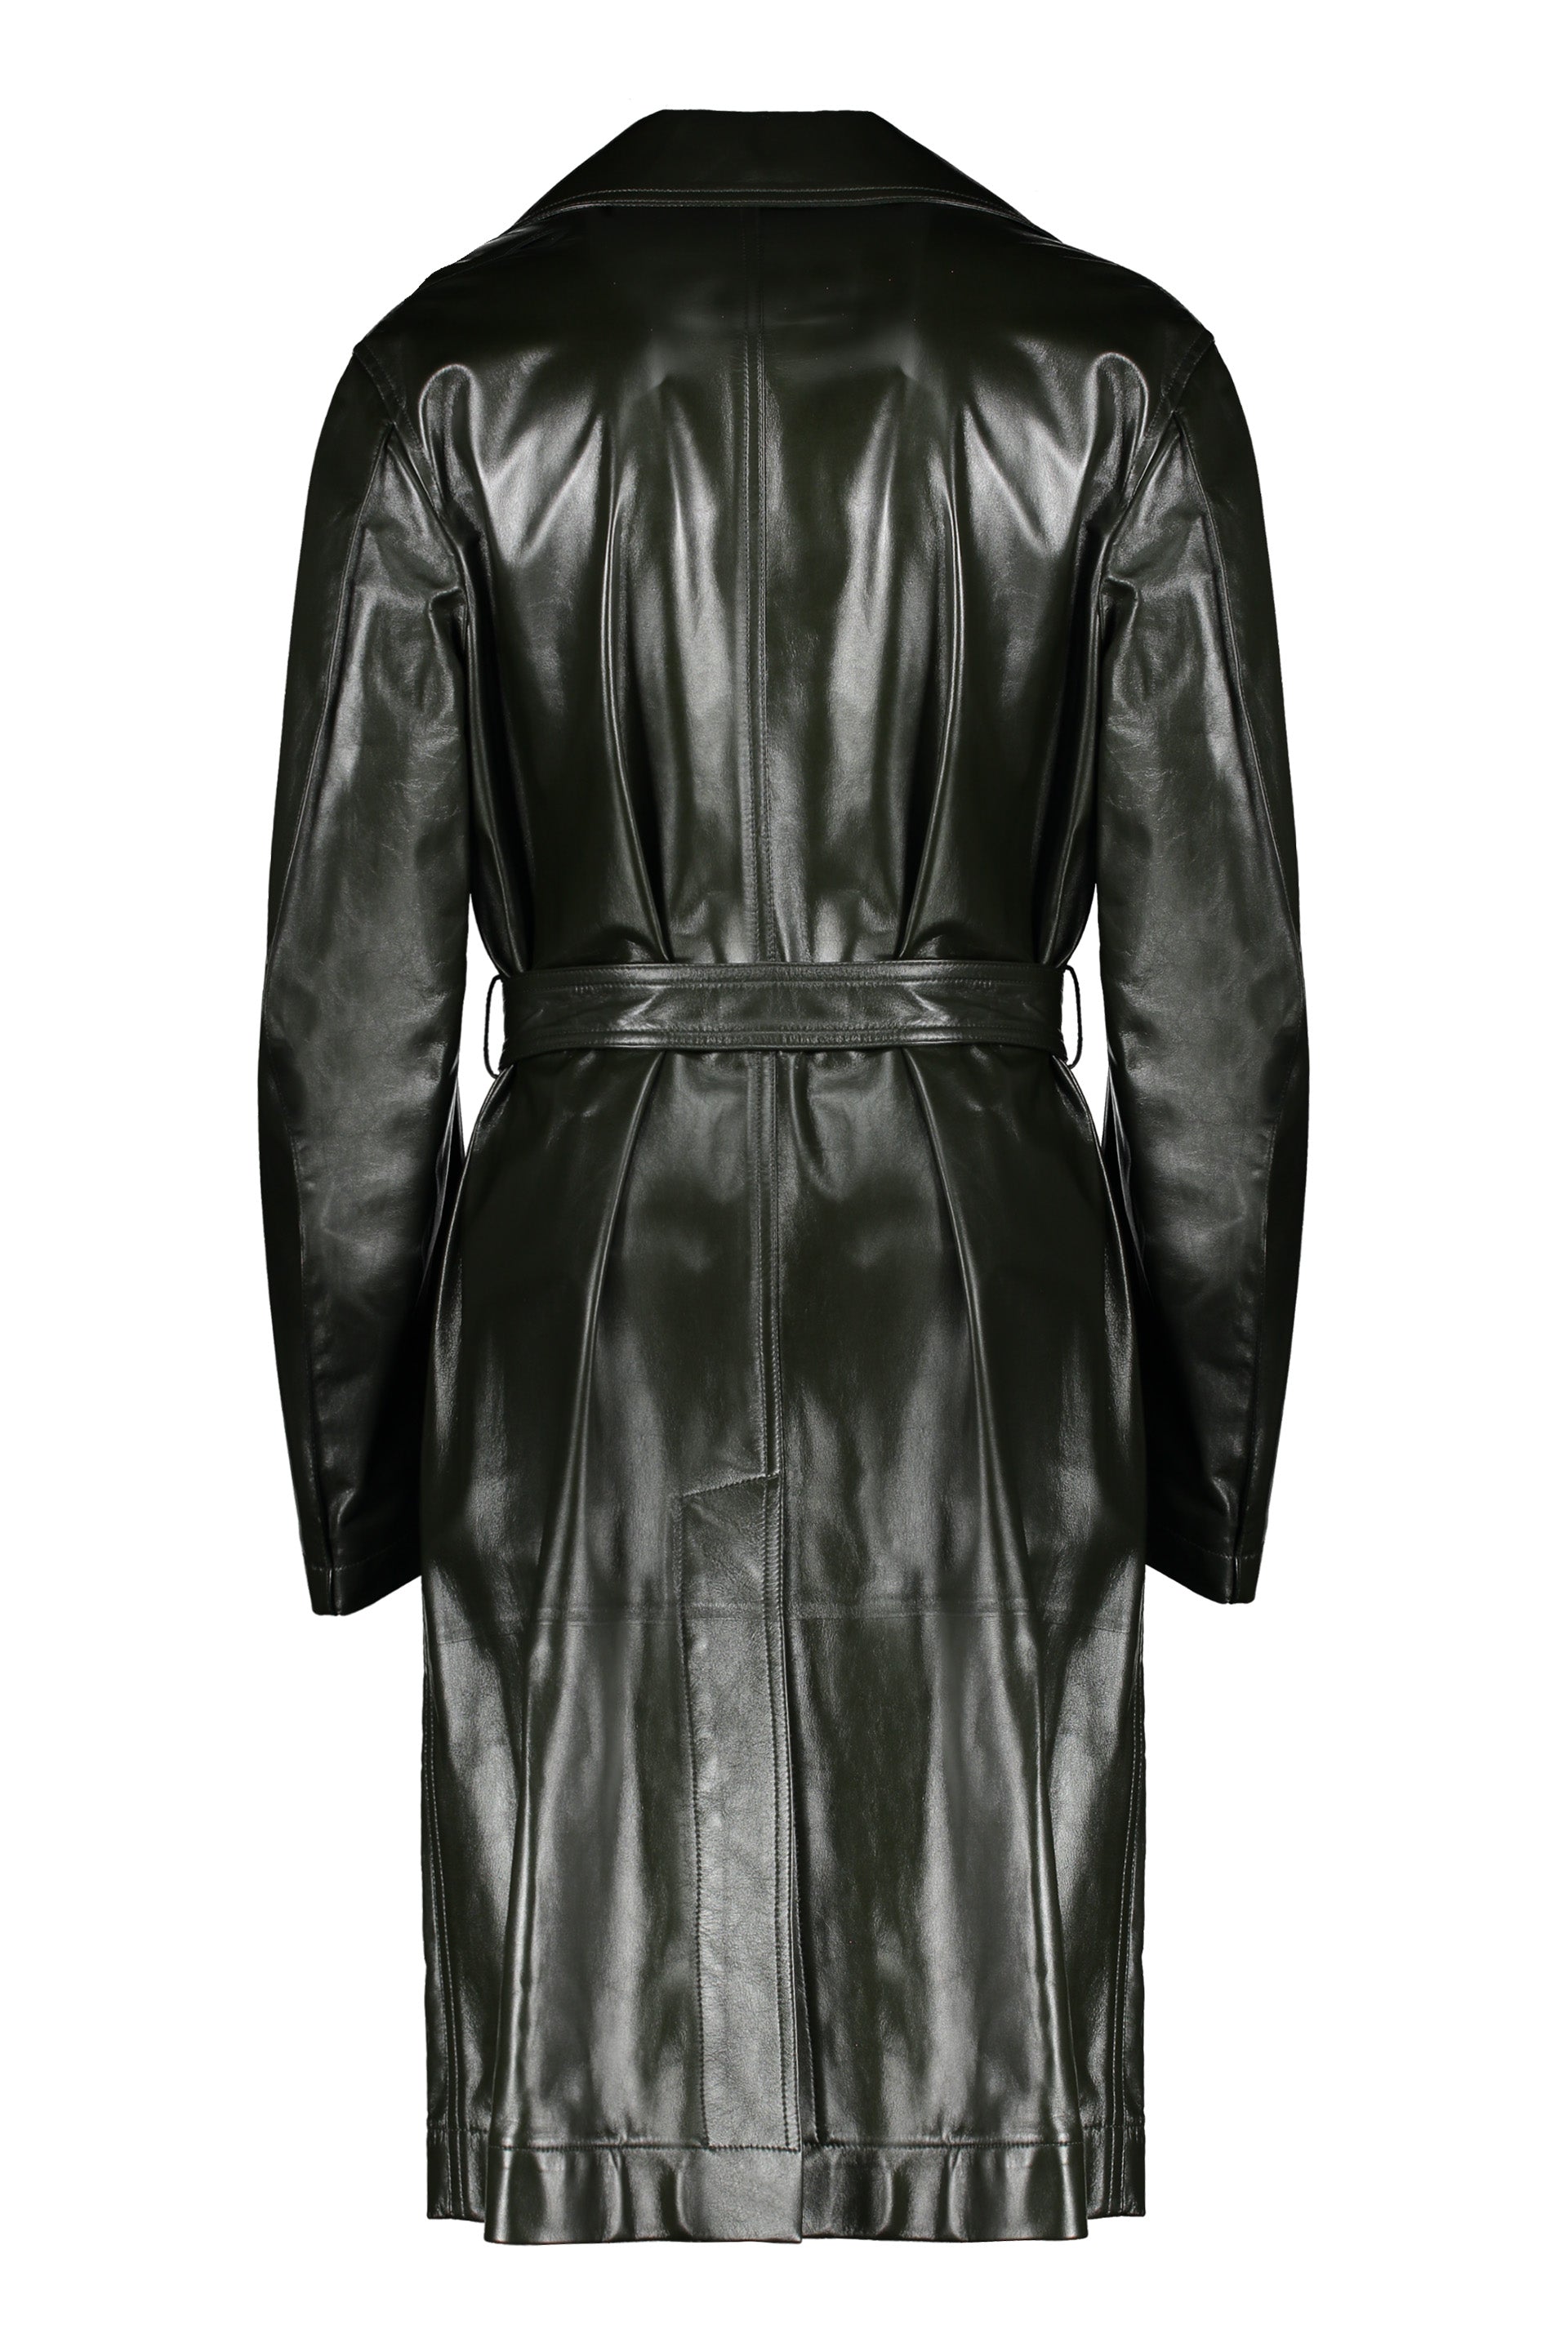 Lambskin jacket-Bottega Veneta-OUTLET-SALE-50-ARCHIVIST